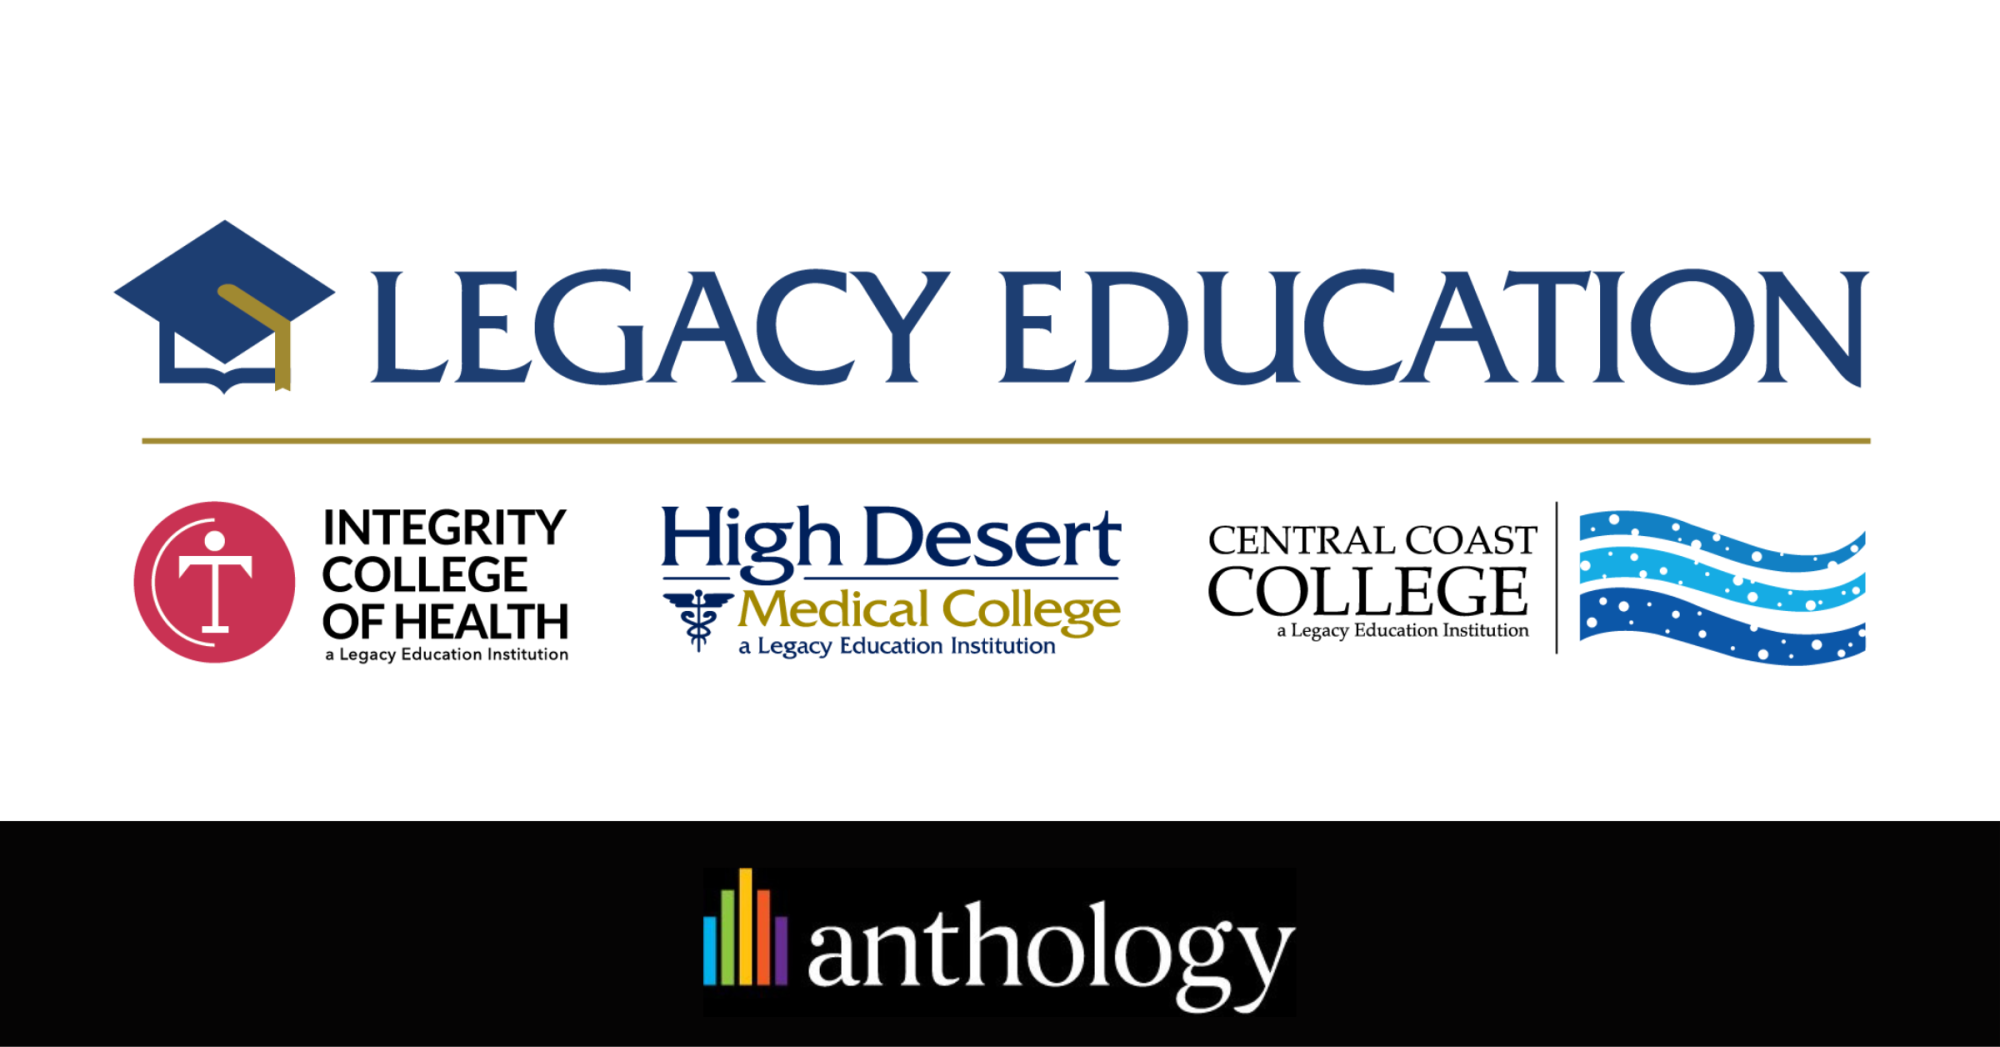 Legacy Education Press Release